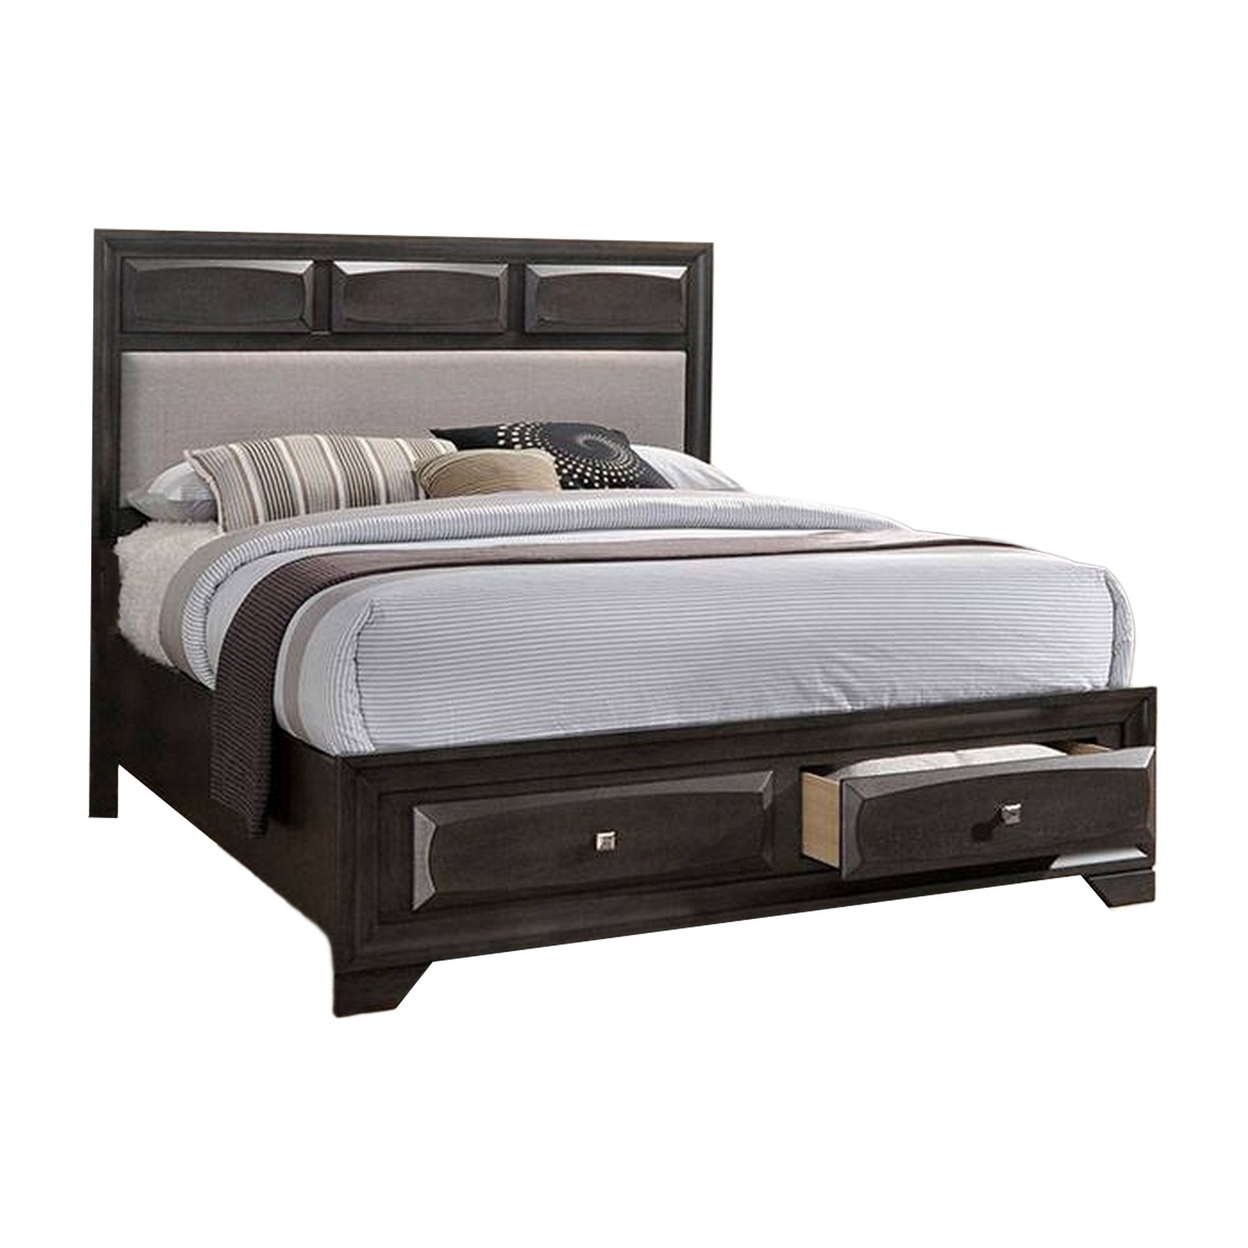 Kevi King Size Bed, Beige Fabric Upholstered Headboard, Storage, Oak Gray- Saltoro Sherpi